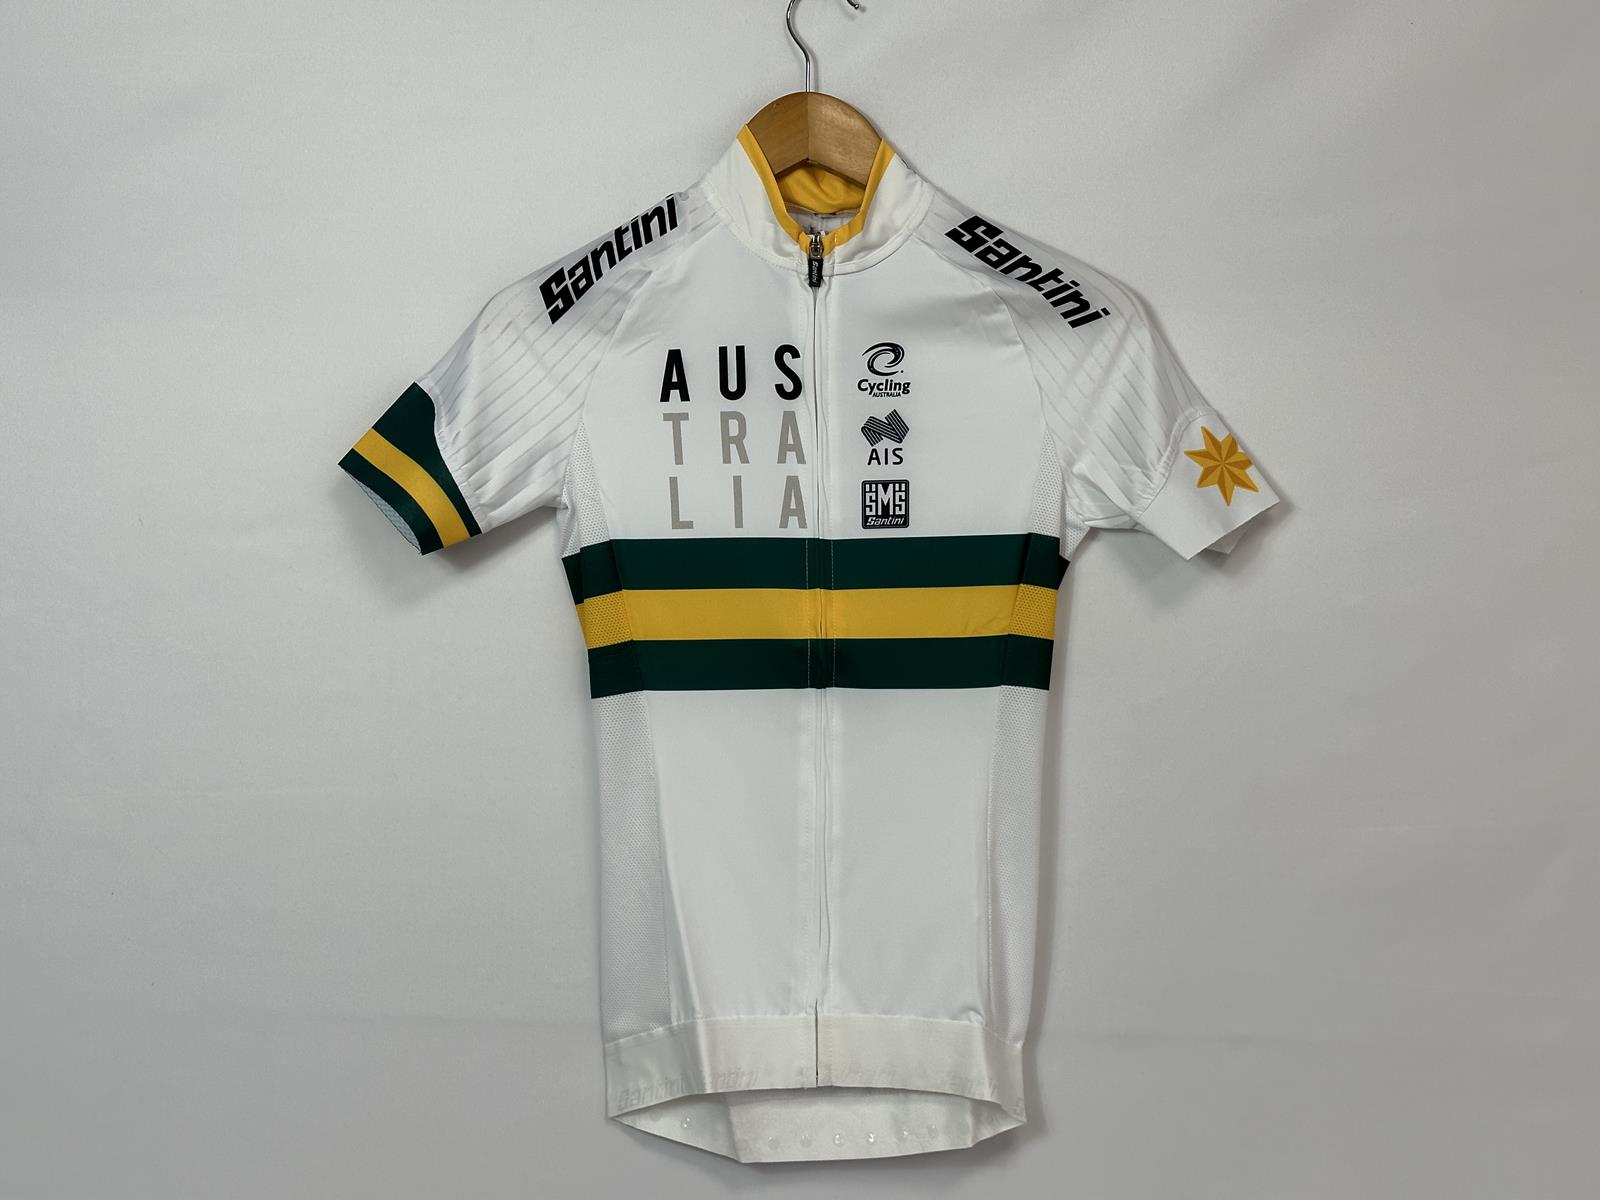 Maillot aerodinámico Sleek Plus del equipo ciclista australiano